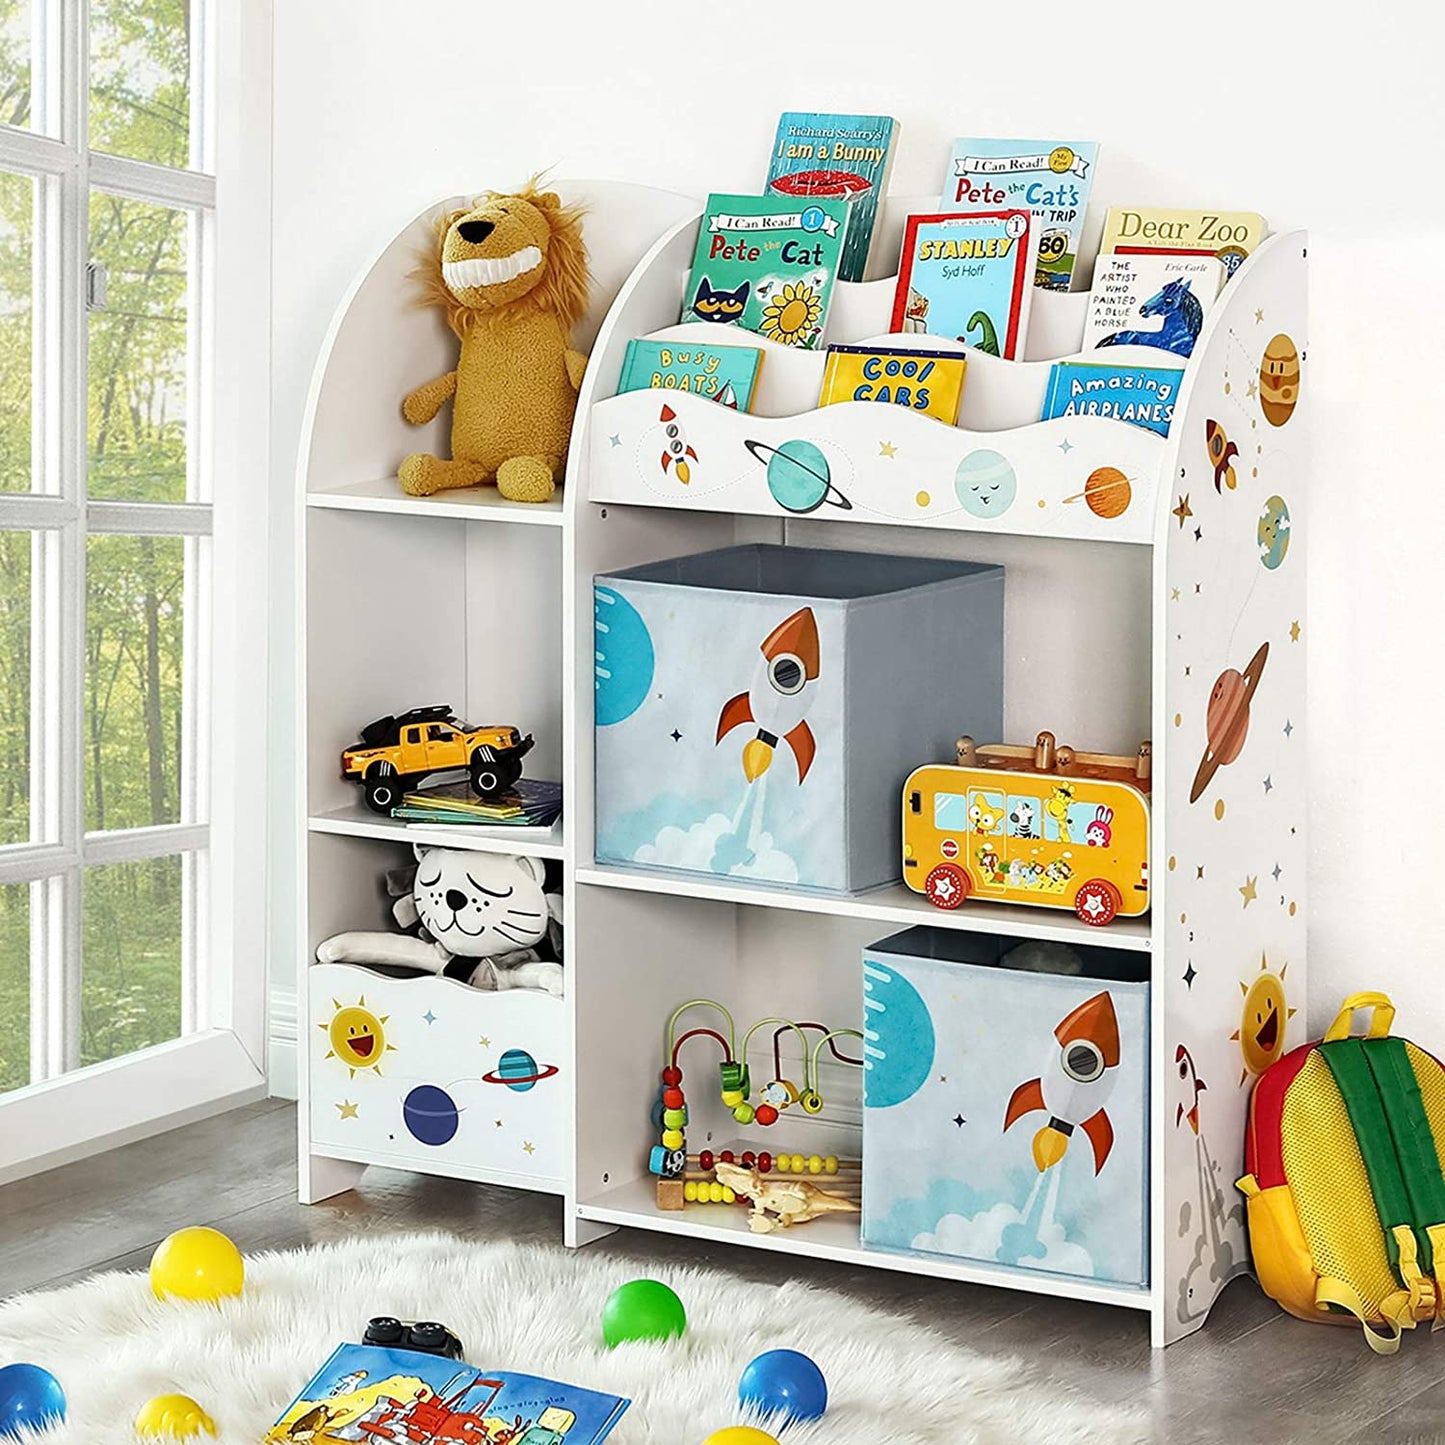 Nancy's Speelgoed Organizer - Speelgoed opbergen -Kinderkamer kast - Wit - 93 x 30 x 100 cm